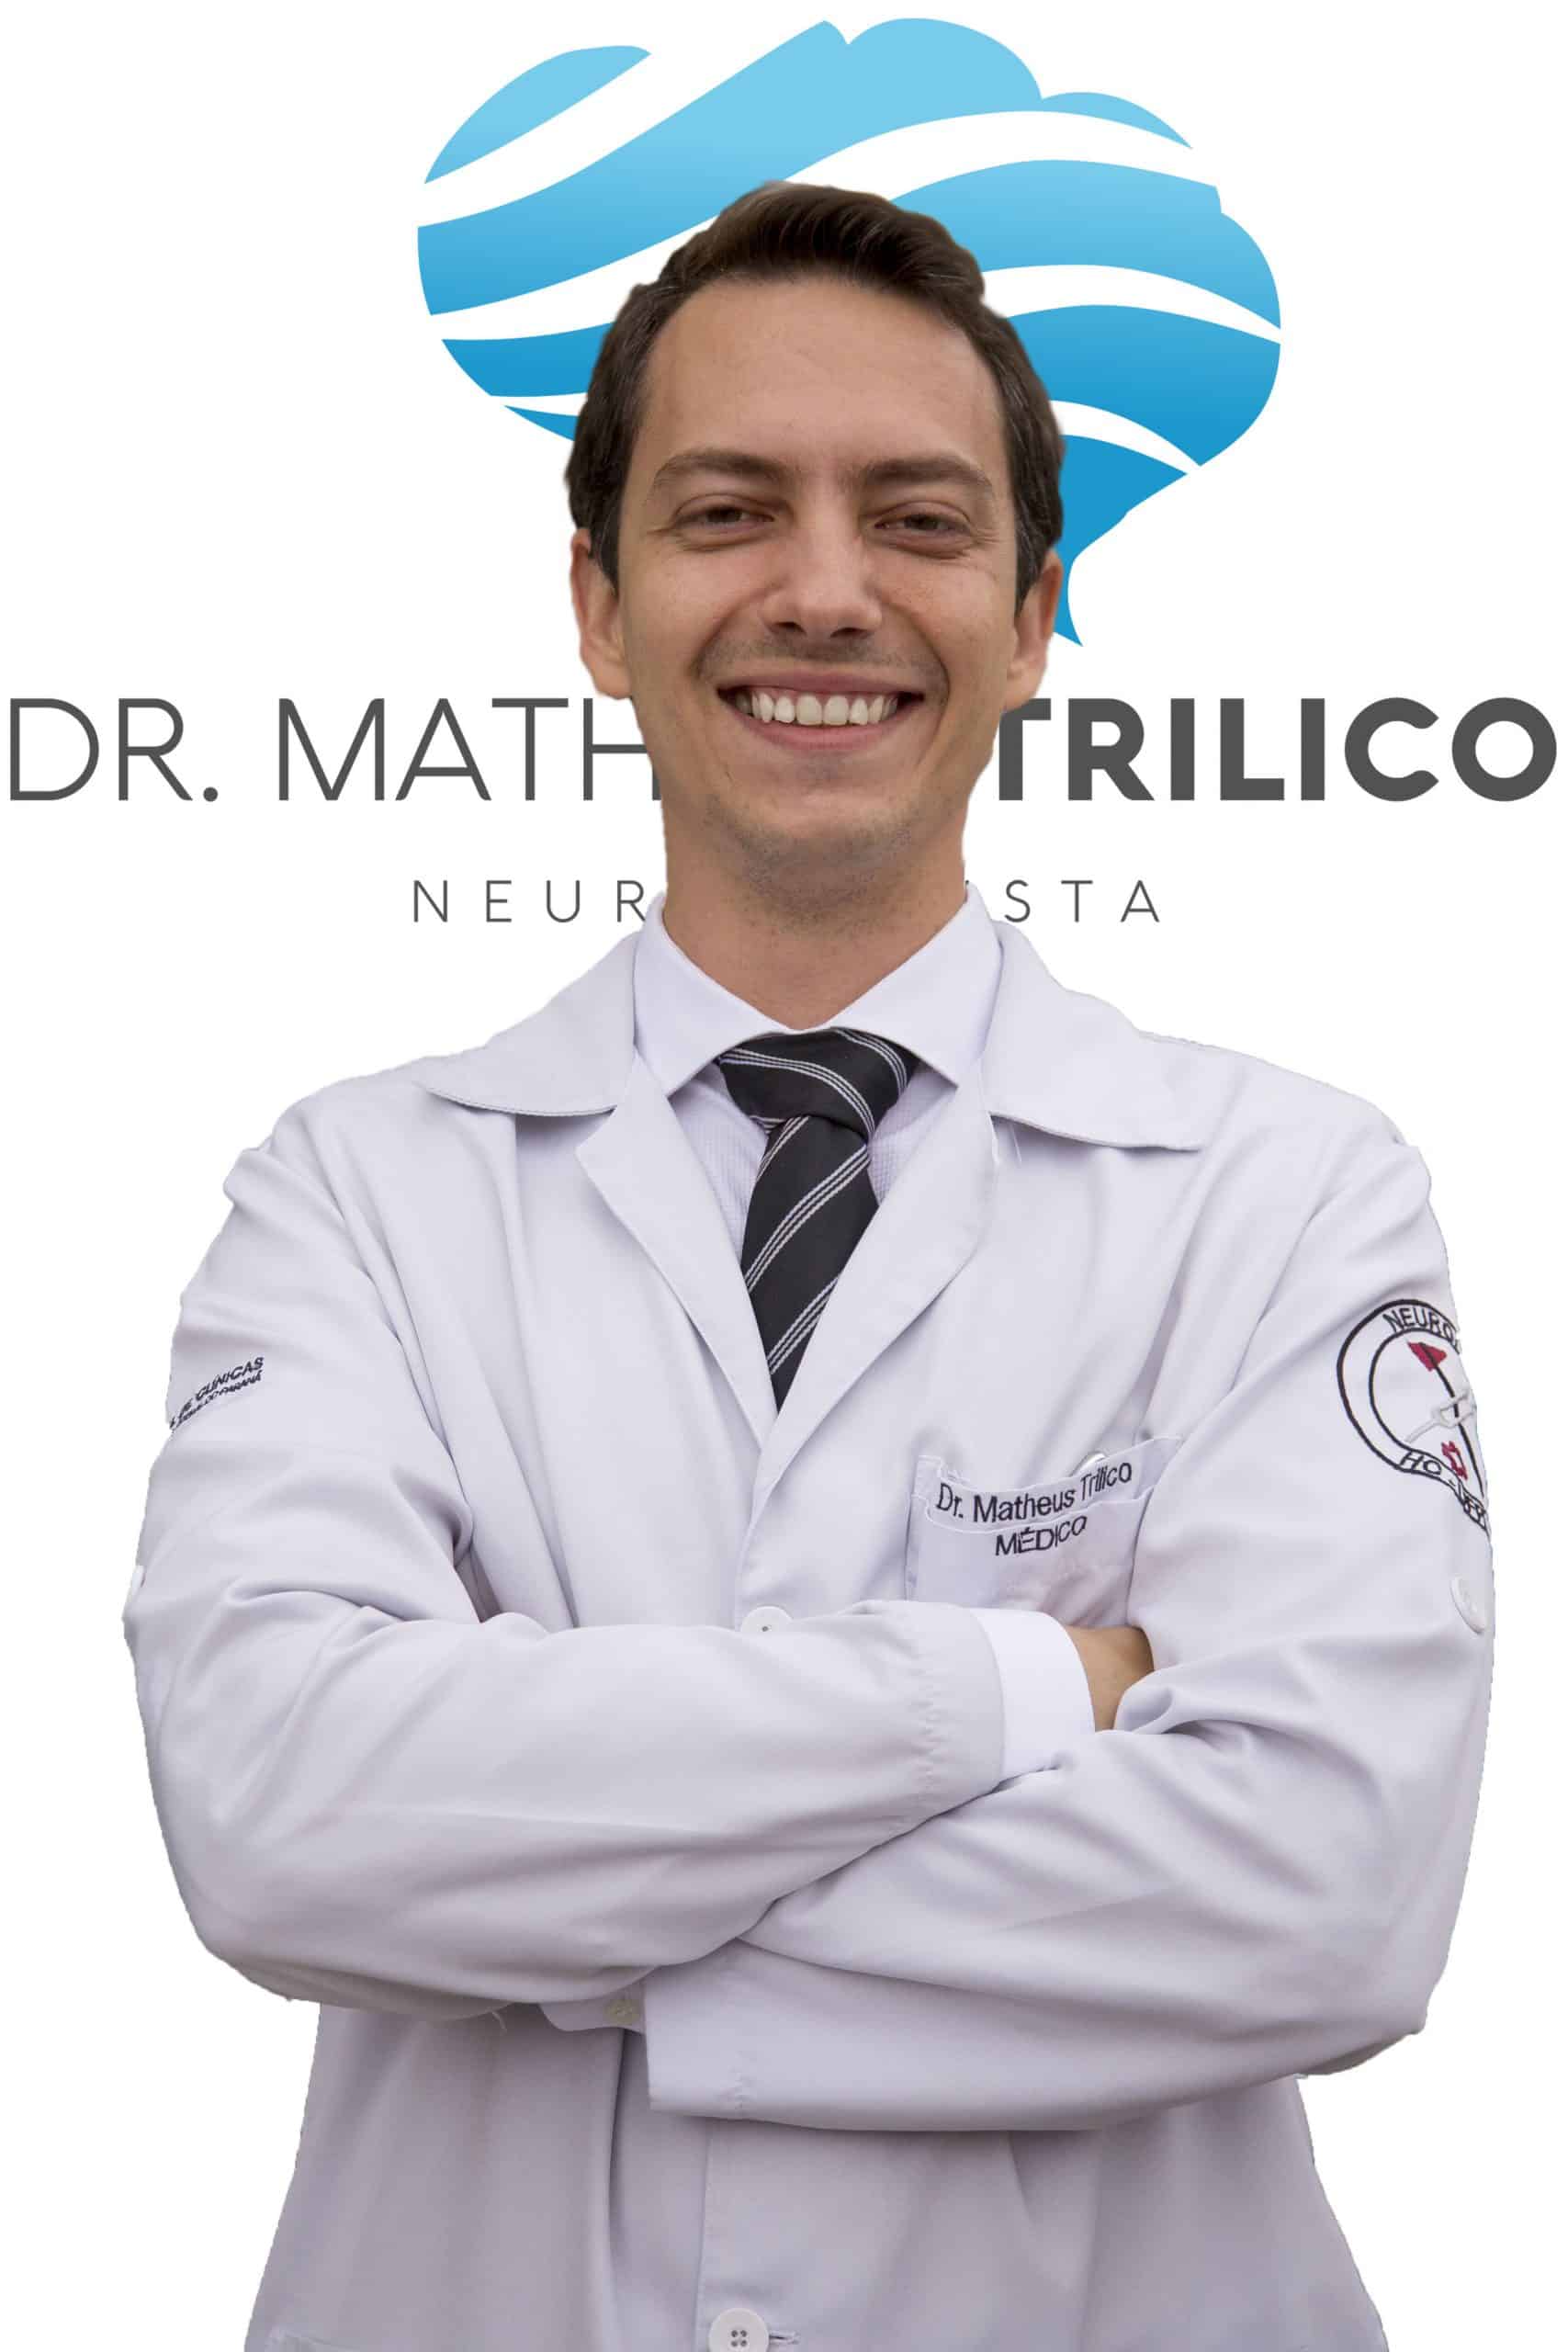 DR. MATHEUS TRILICO